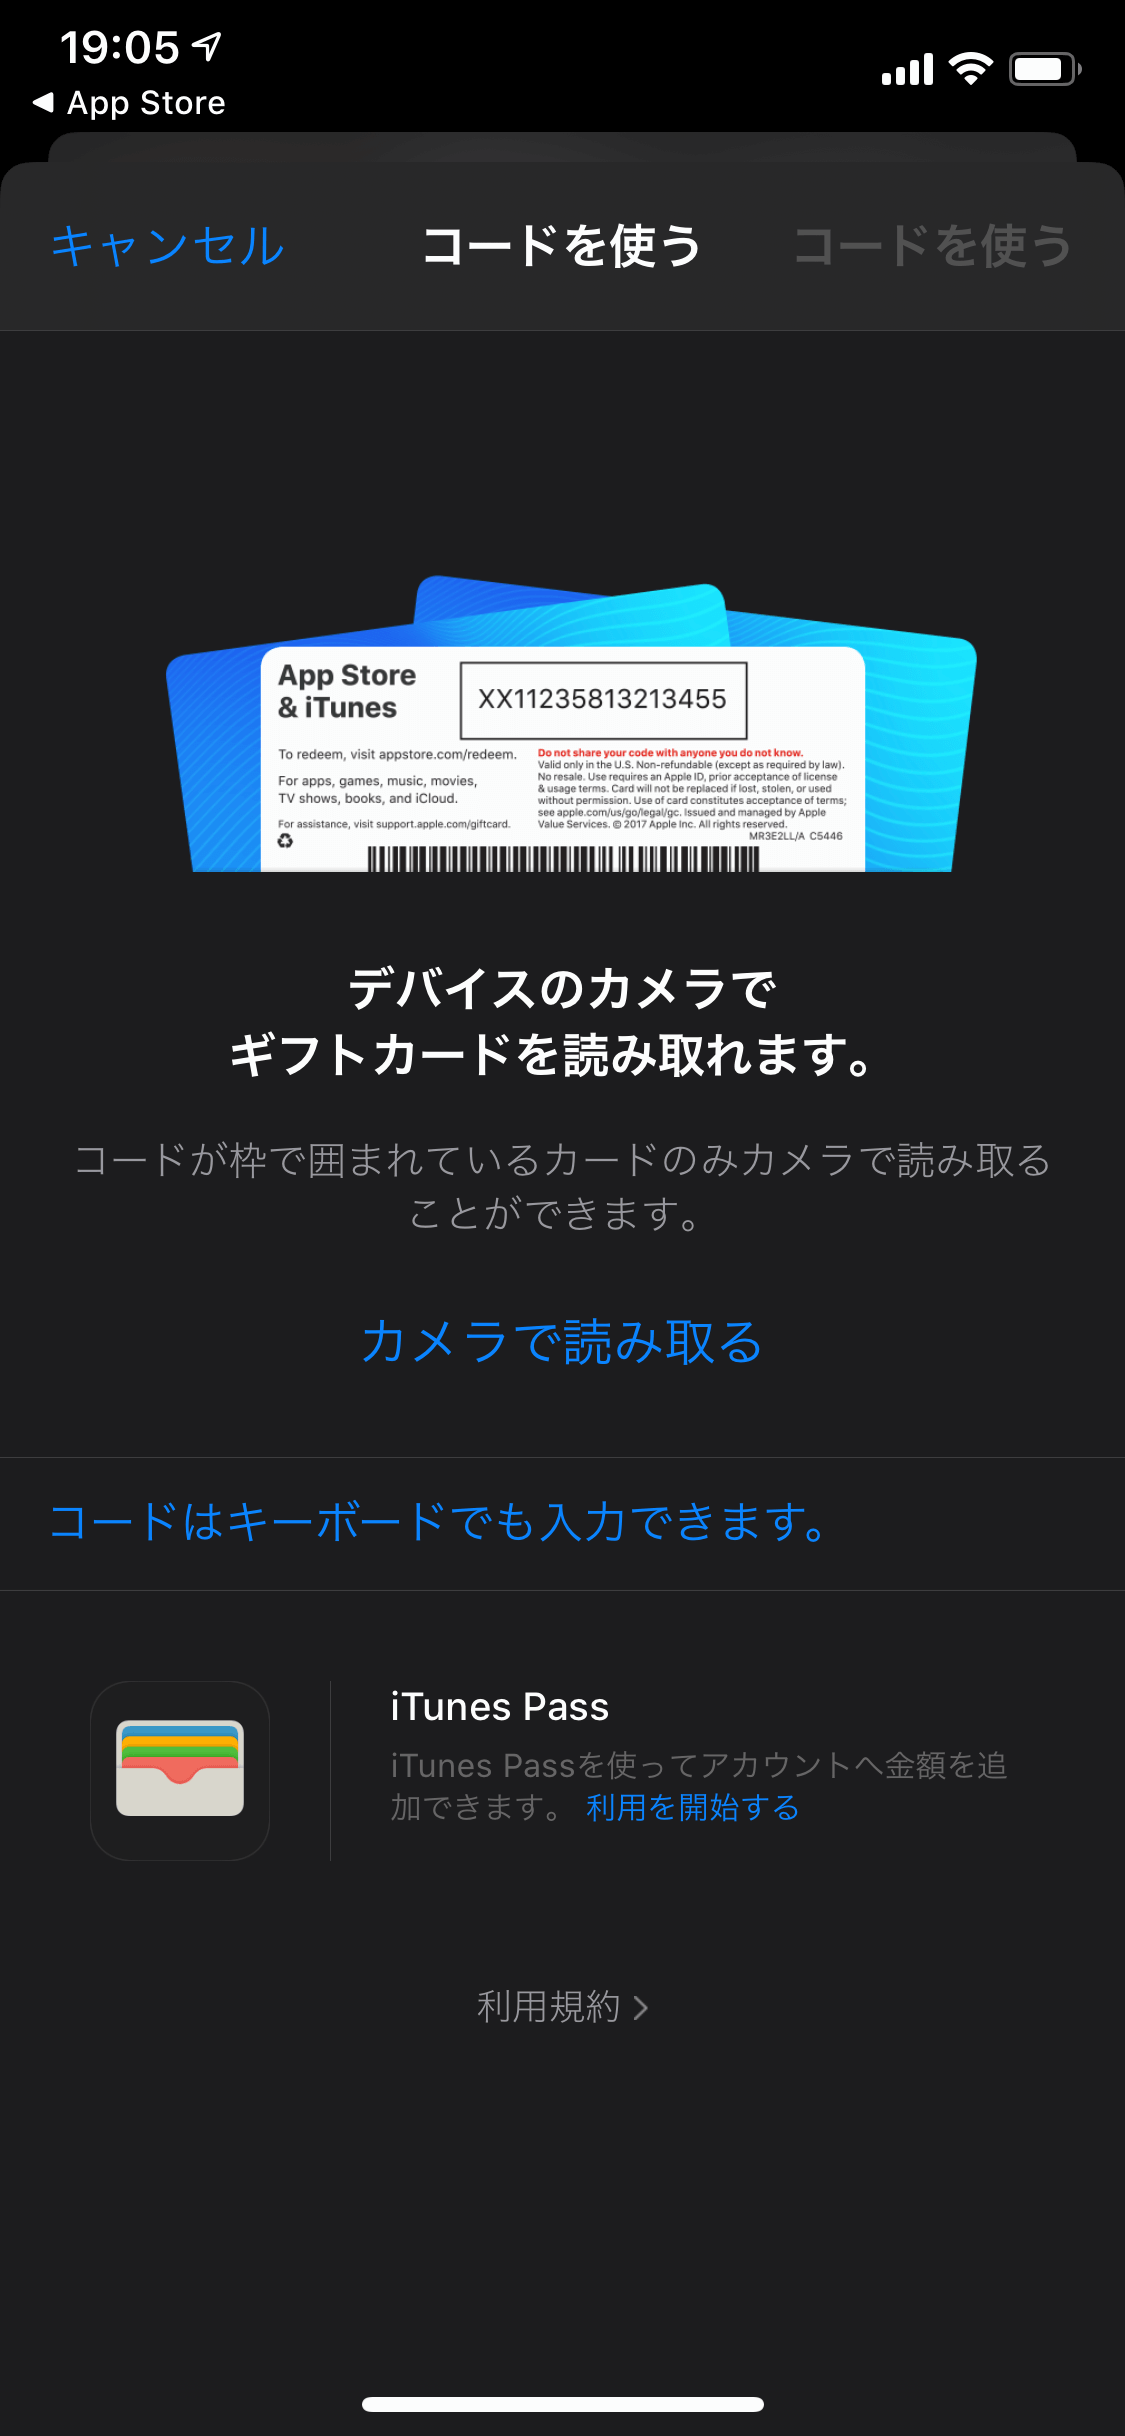 App Store３